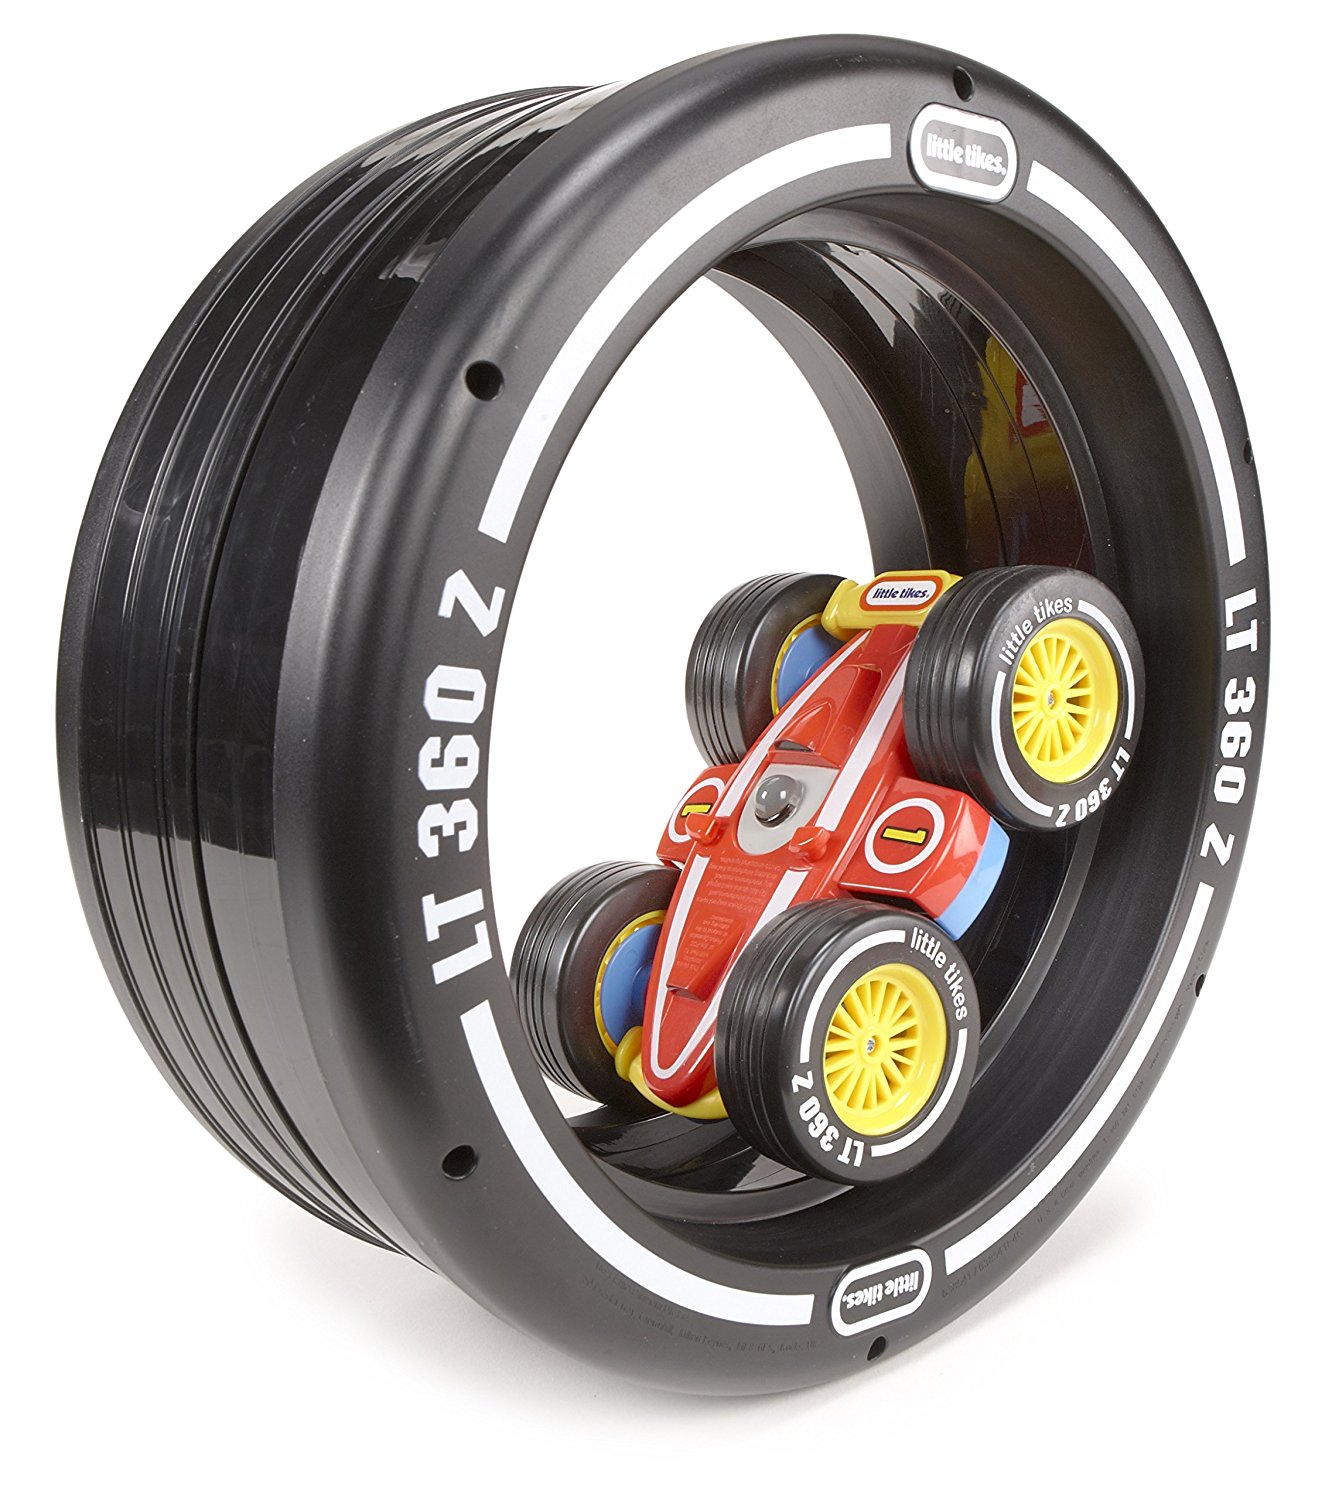 Amazon.com: Little Tikes Tire Twister: Toys & Games